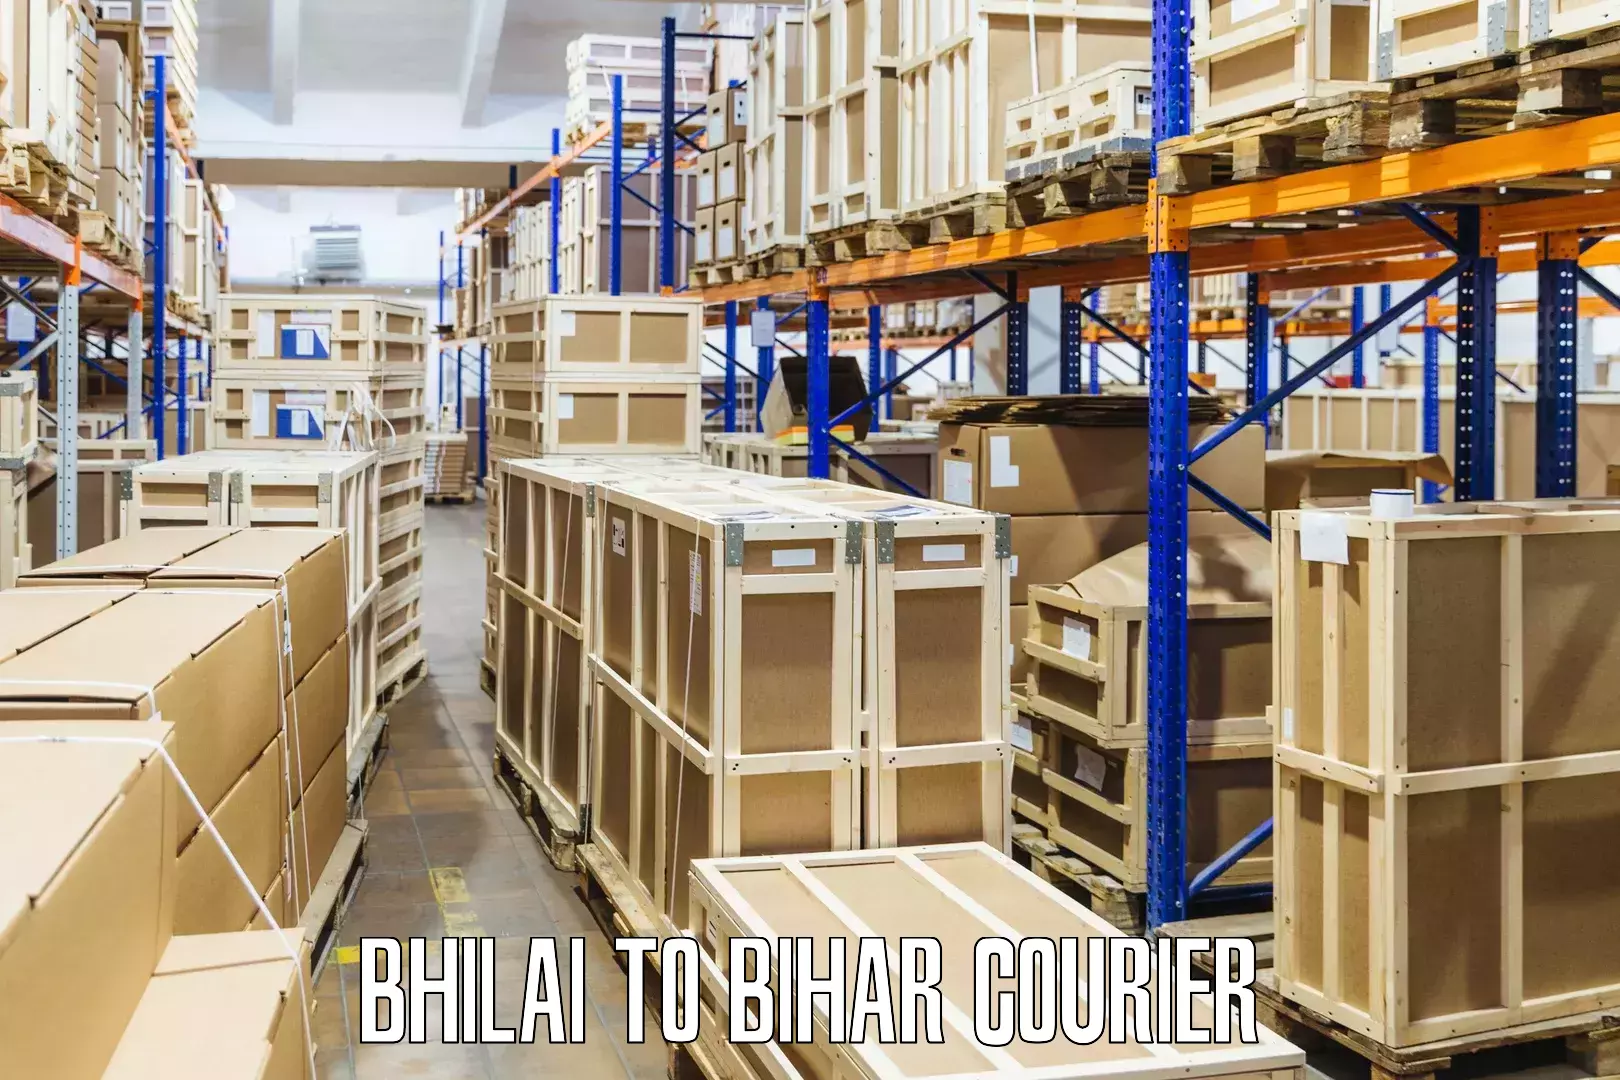 Courier service comparison in Bhilai to Patna